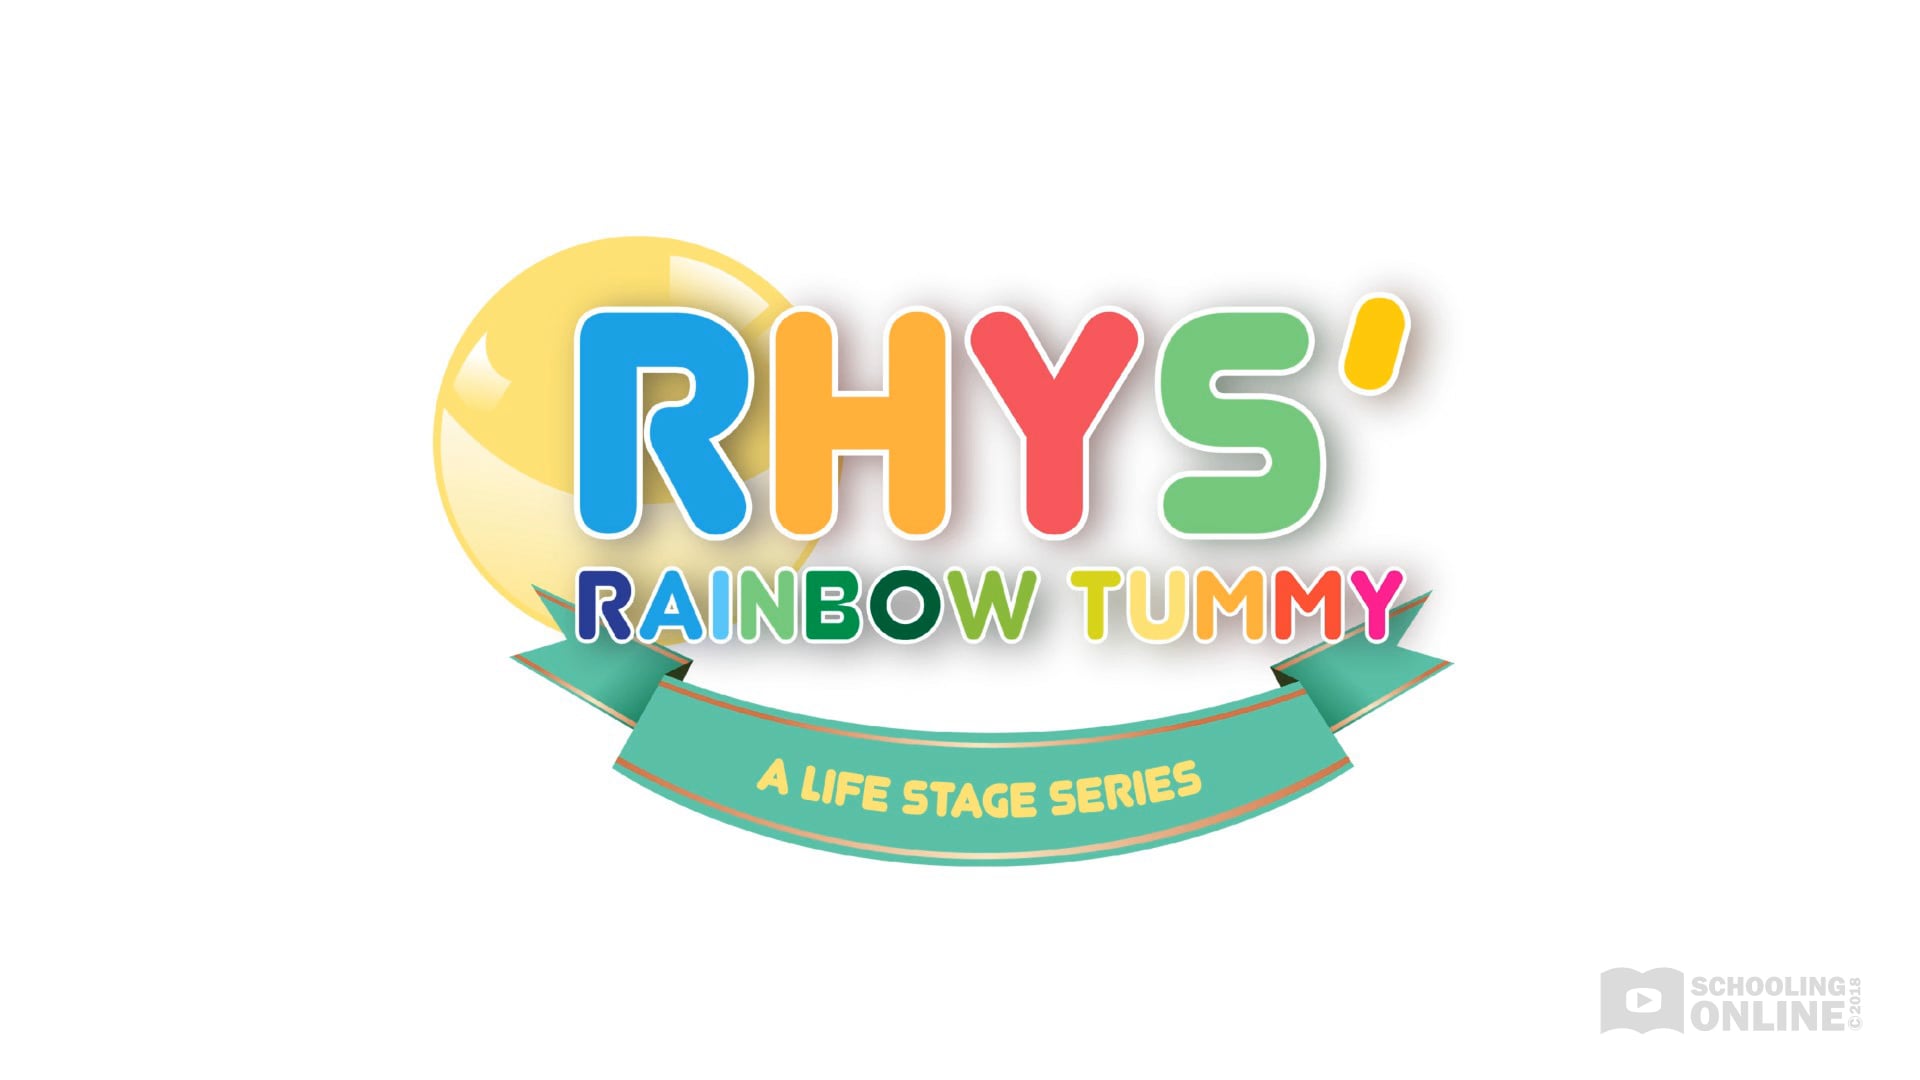 Rhys' Rainbow Tummy - The Life Stage Series